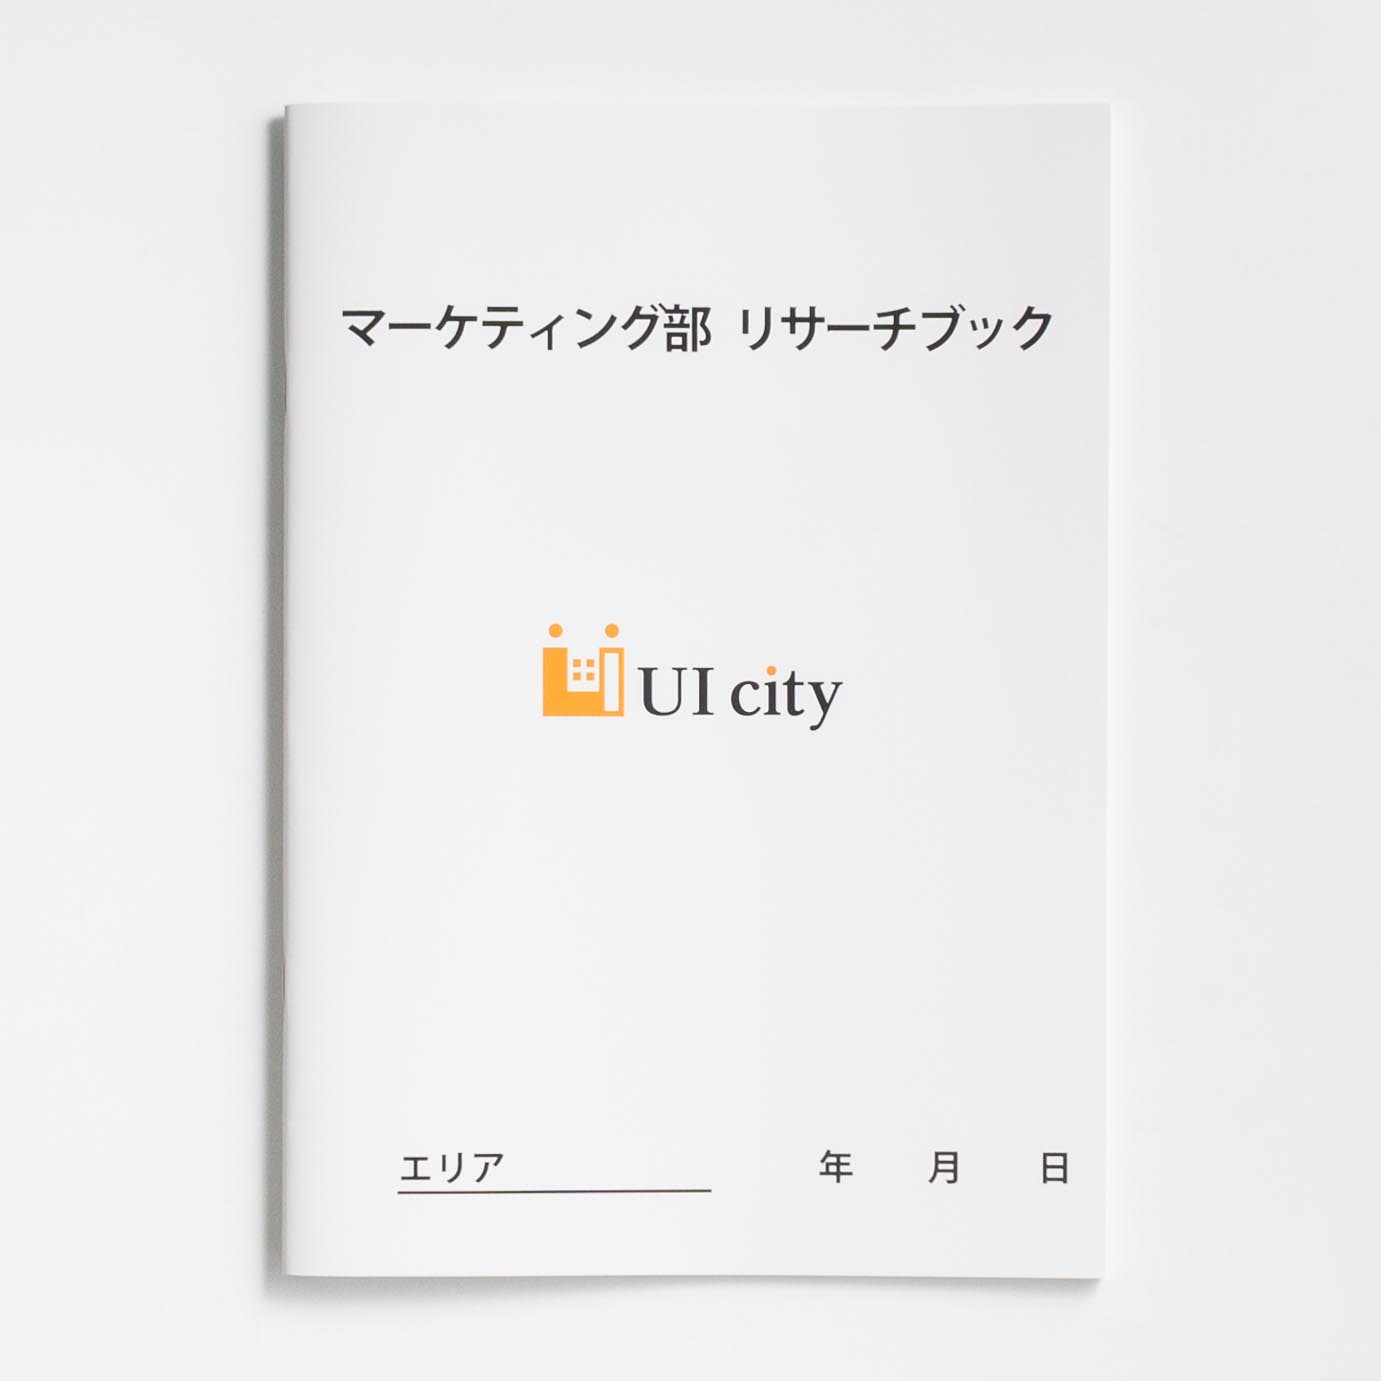 「UIcity株式会社 様」製作のオリジナルノート